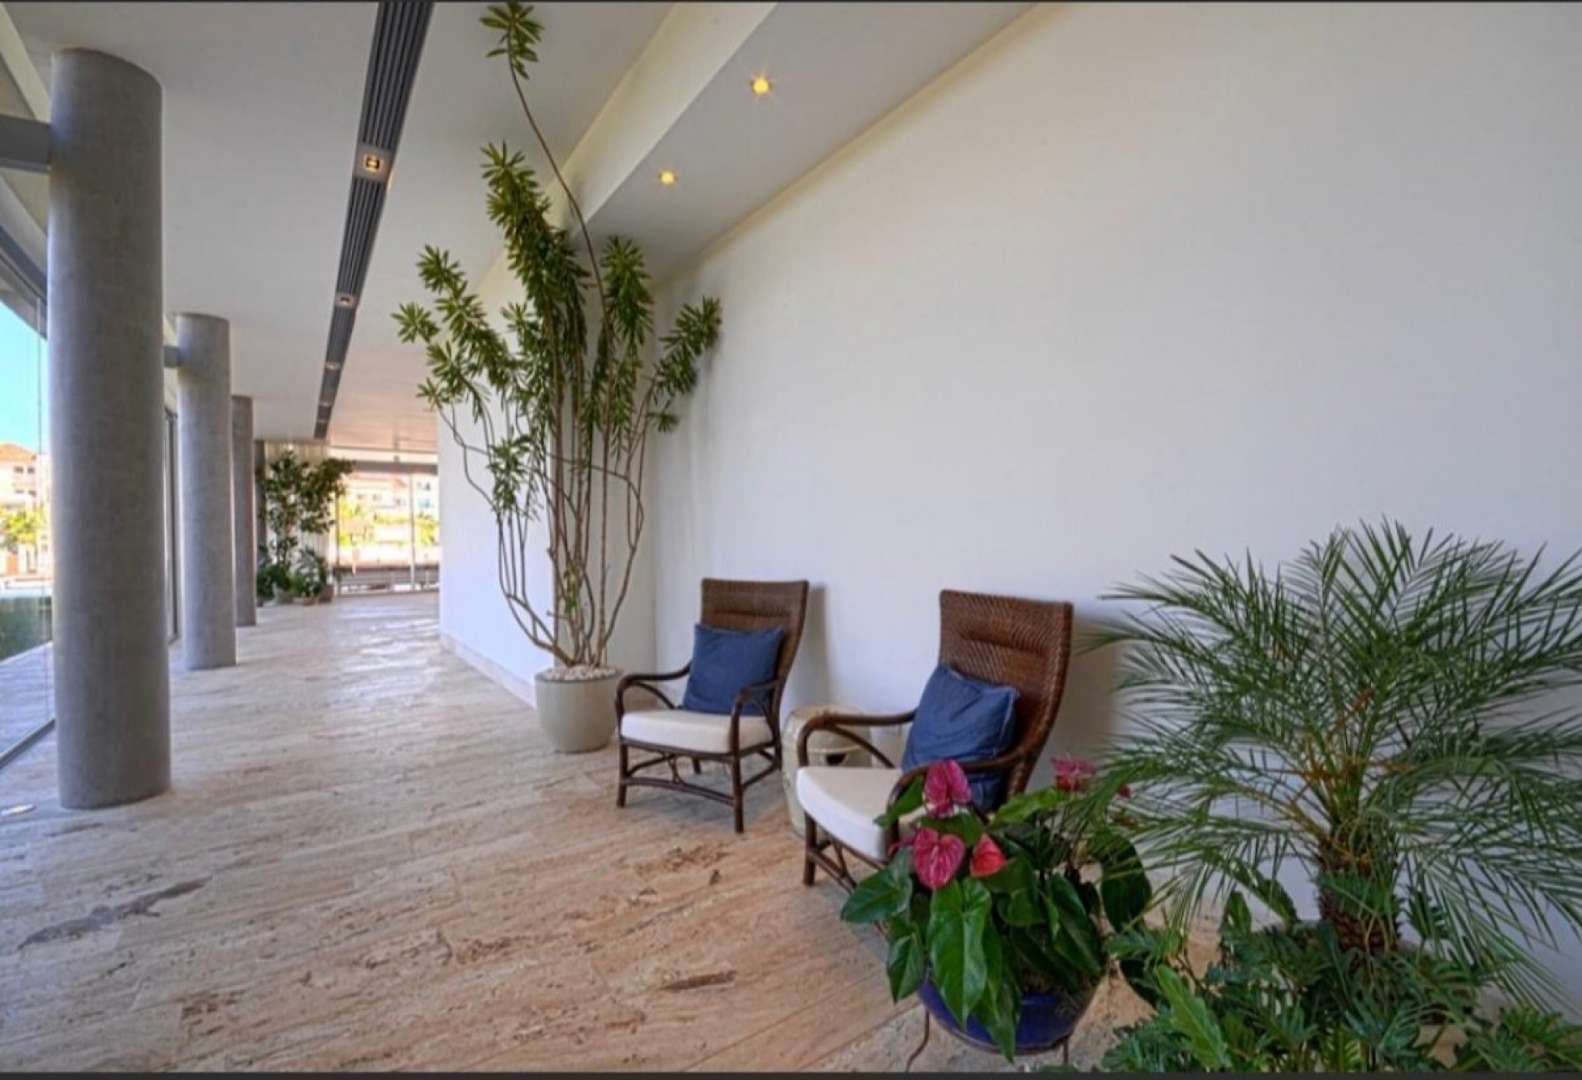  Bedroom Villa For Sale Villa Increible En Casa De Campo Lp05016 1e2c5a4e69564800.jpeg